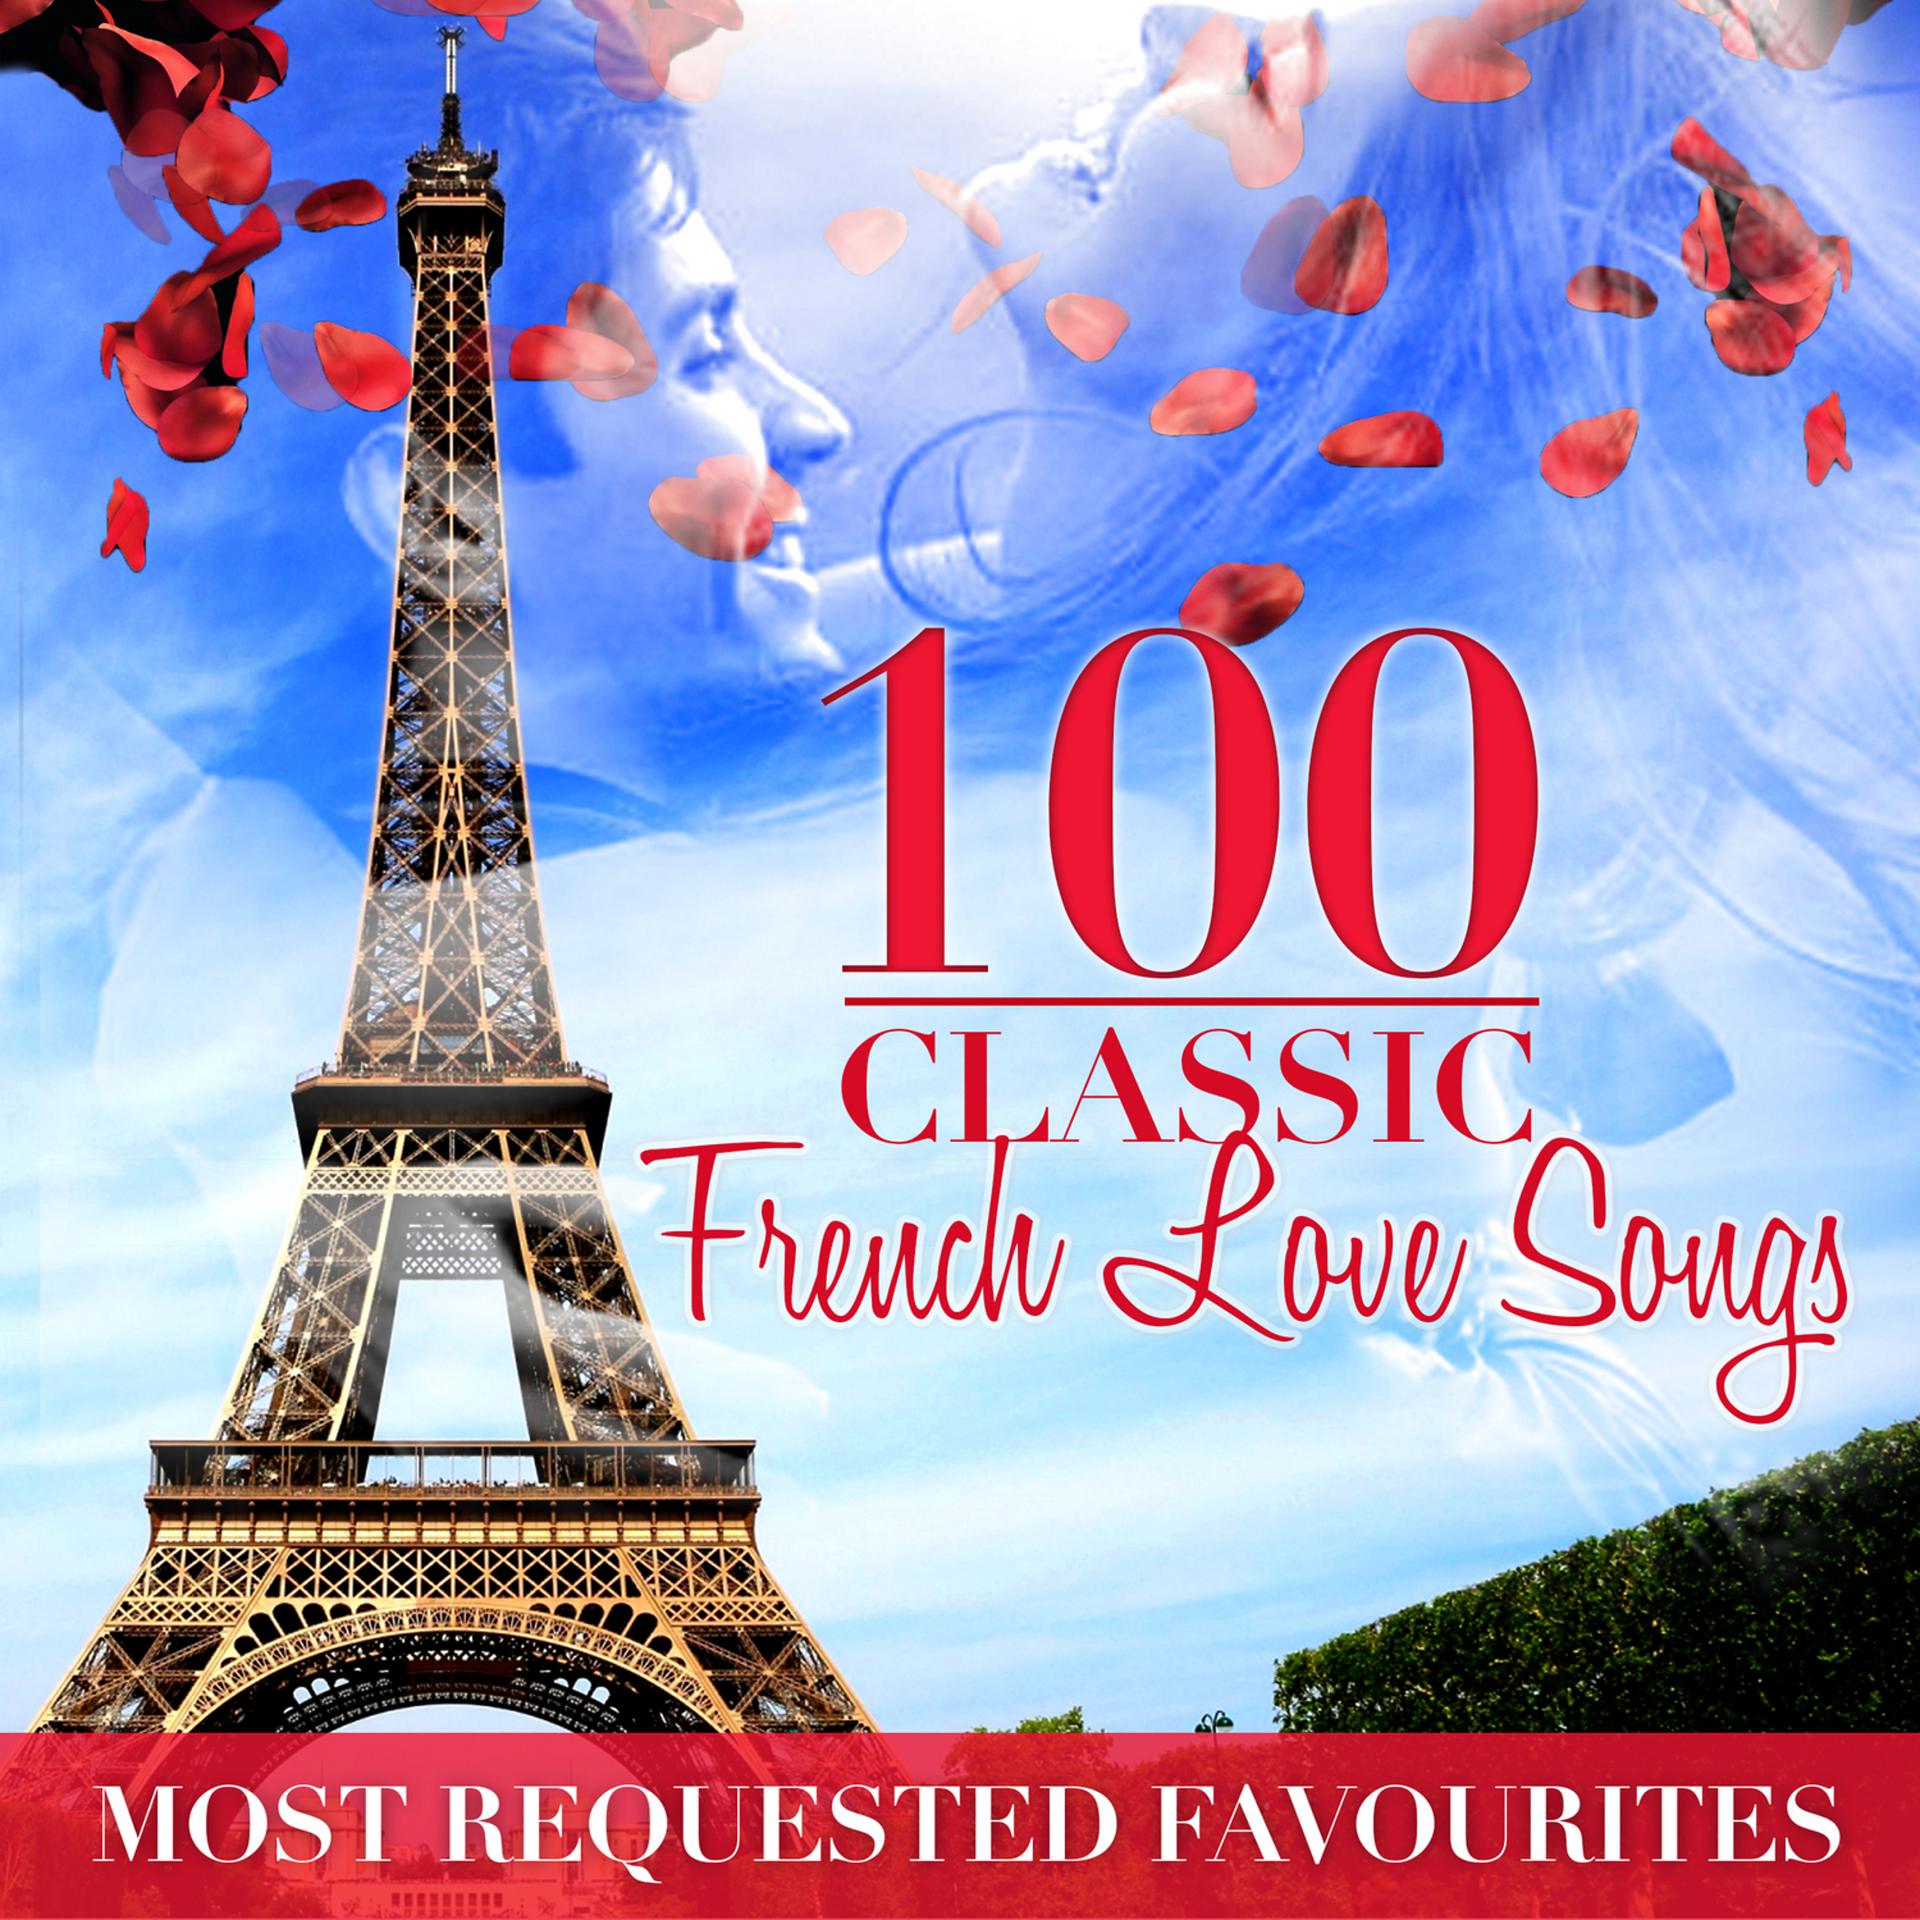 France Love Songs обложки. 100 French Love Songs. 100 Обложка. C'est l'amour: Romantic French Classics фото.